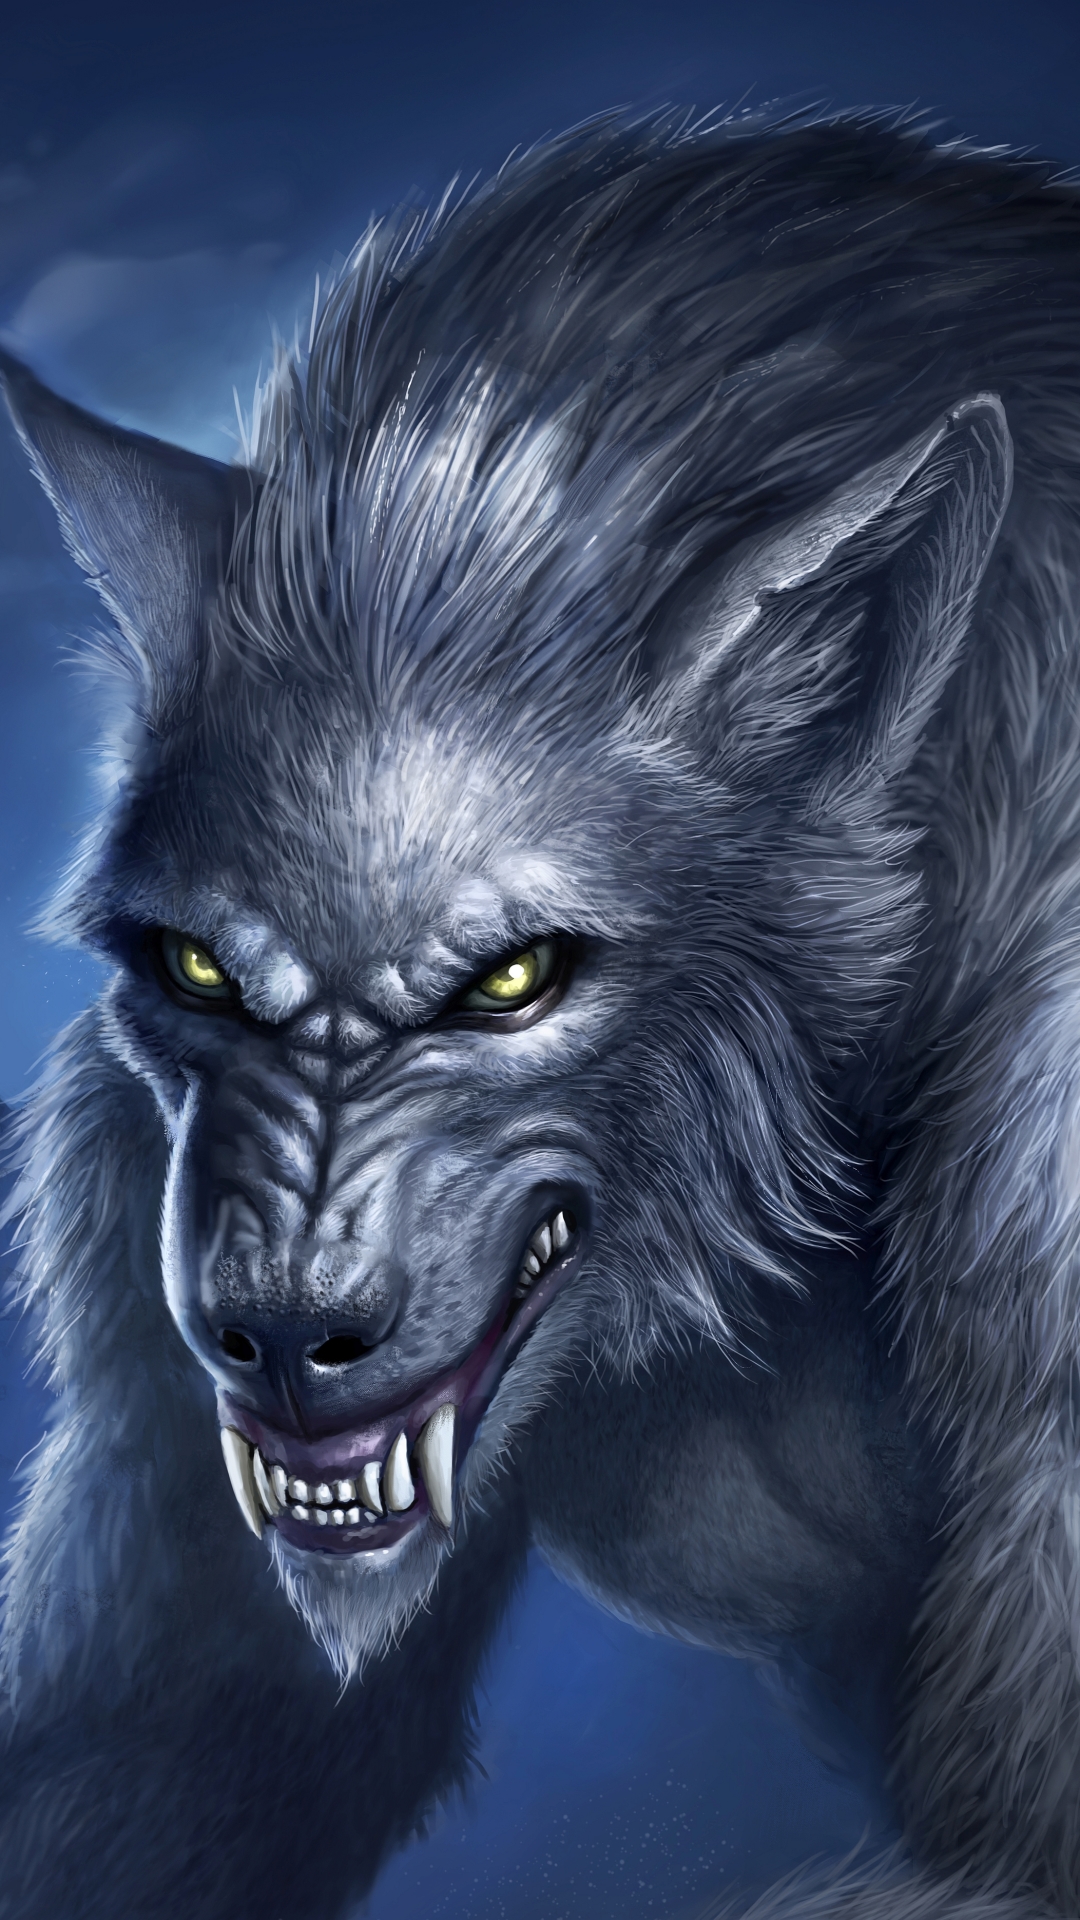 Wallpaper ID 481716  Dark Werewolf Phone Wallpaper  720x1280 free  download